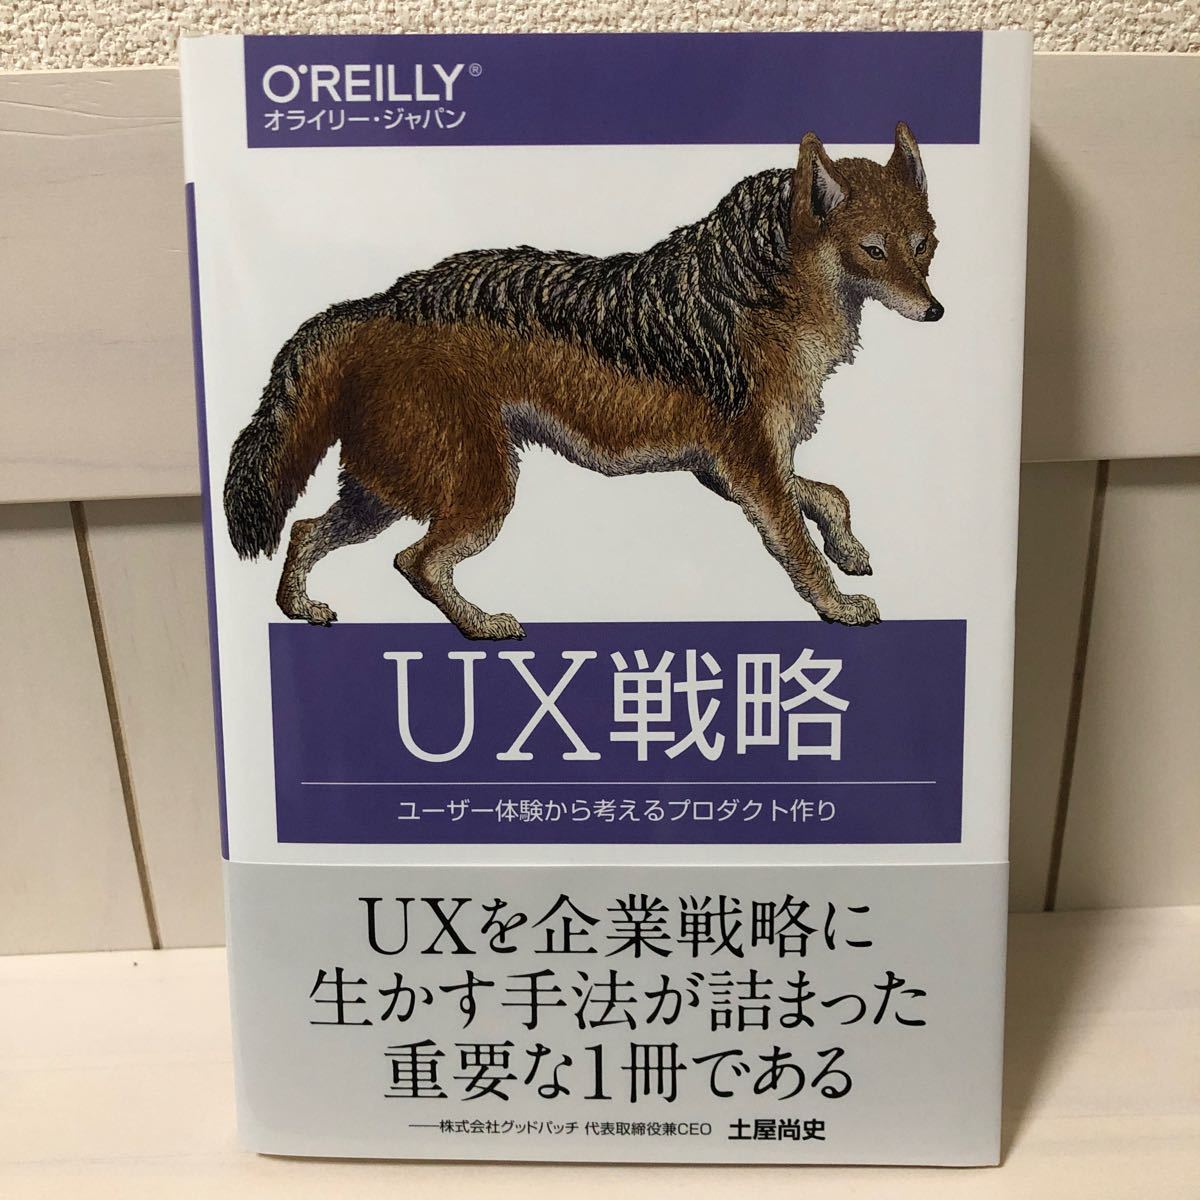 UX戦略 ユーザー体験から考えるプロダクト作り/JaimeLevy/安藤幸央/長尾高弘